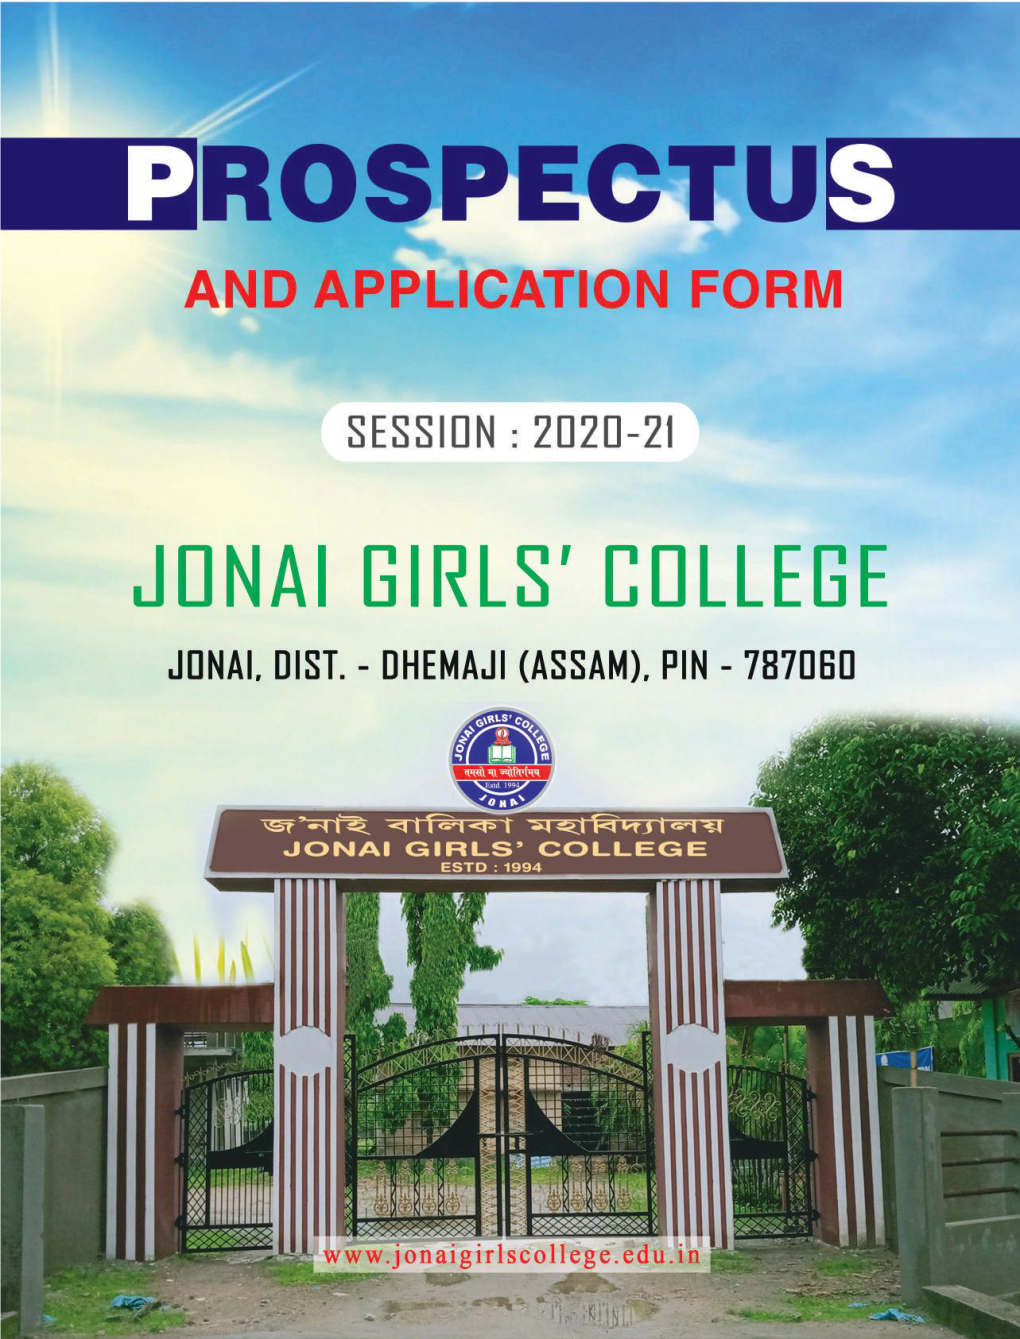 Guidelines for Students of Jonai Girls' College, Jonai